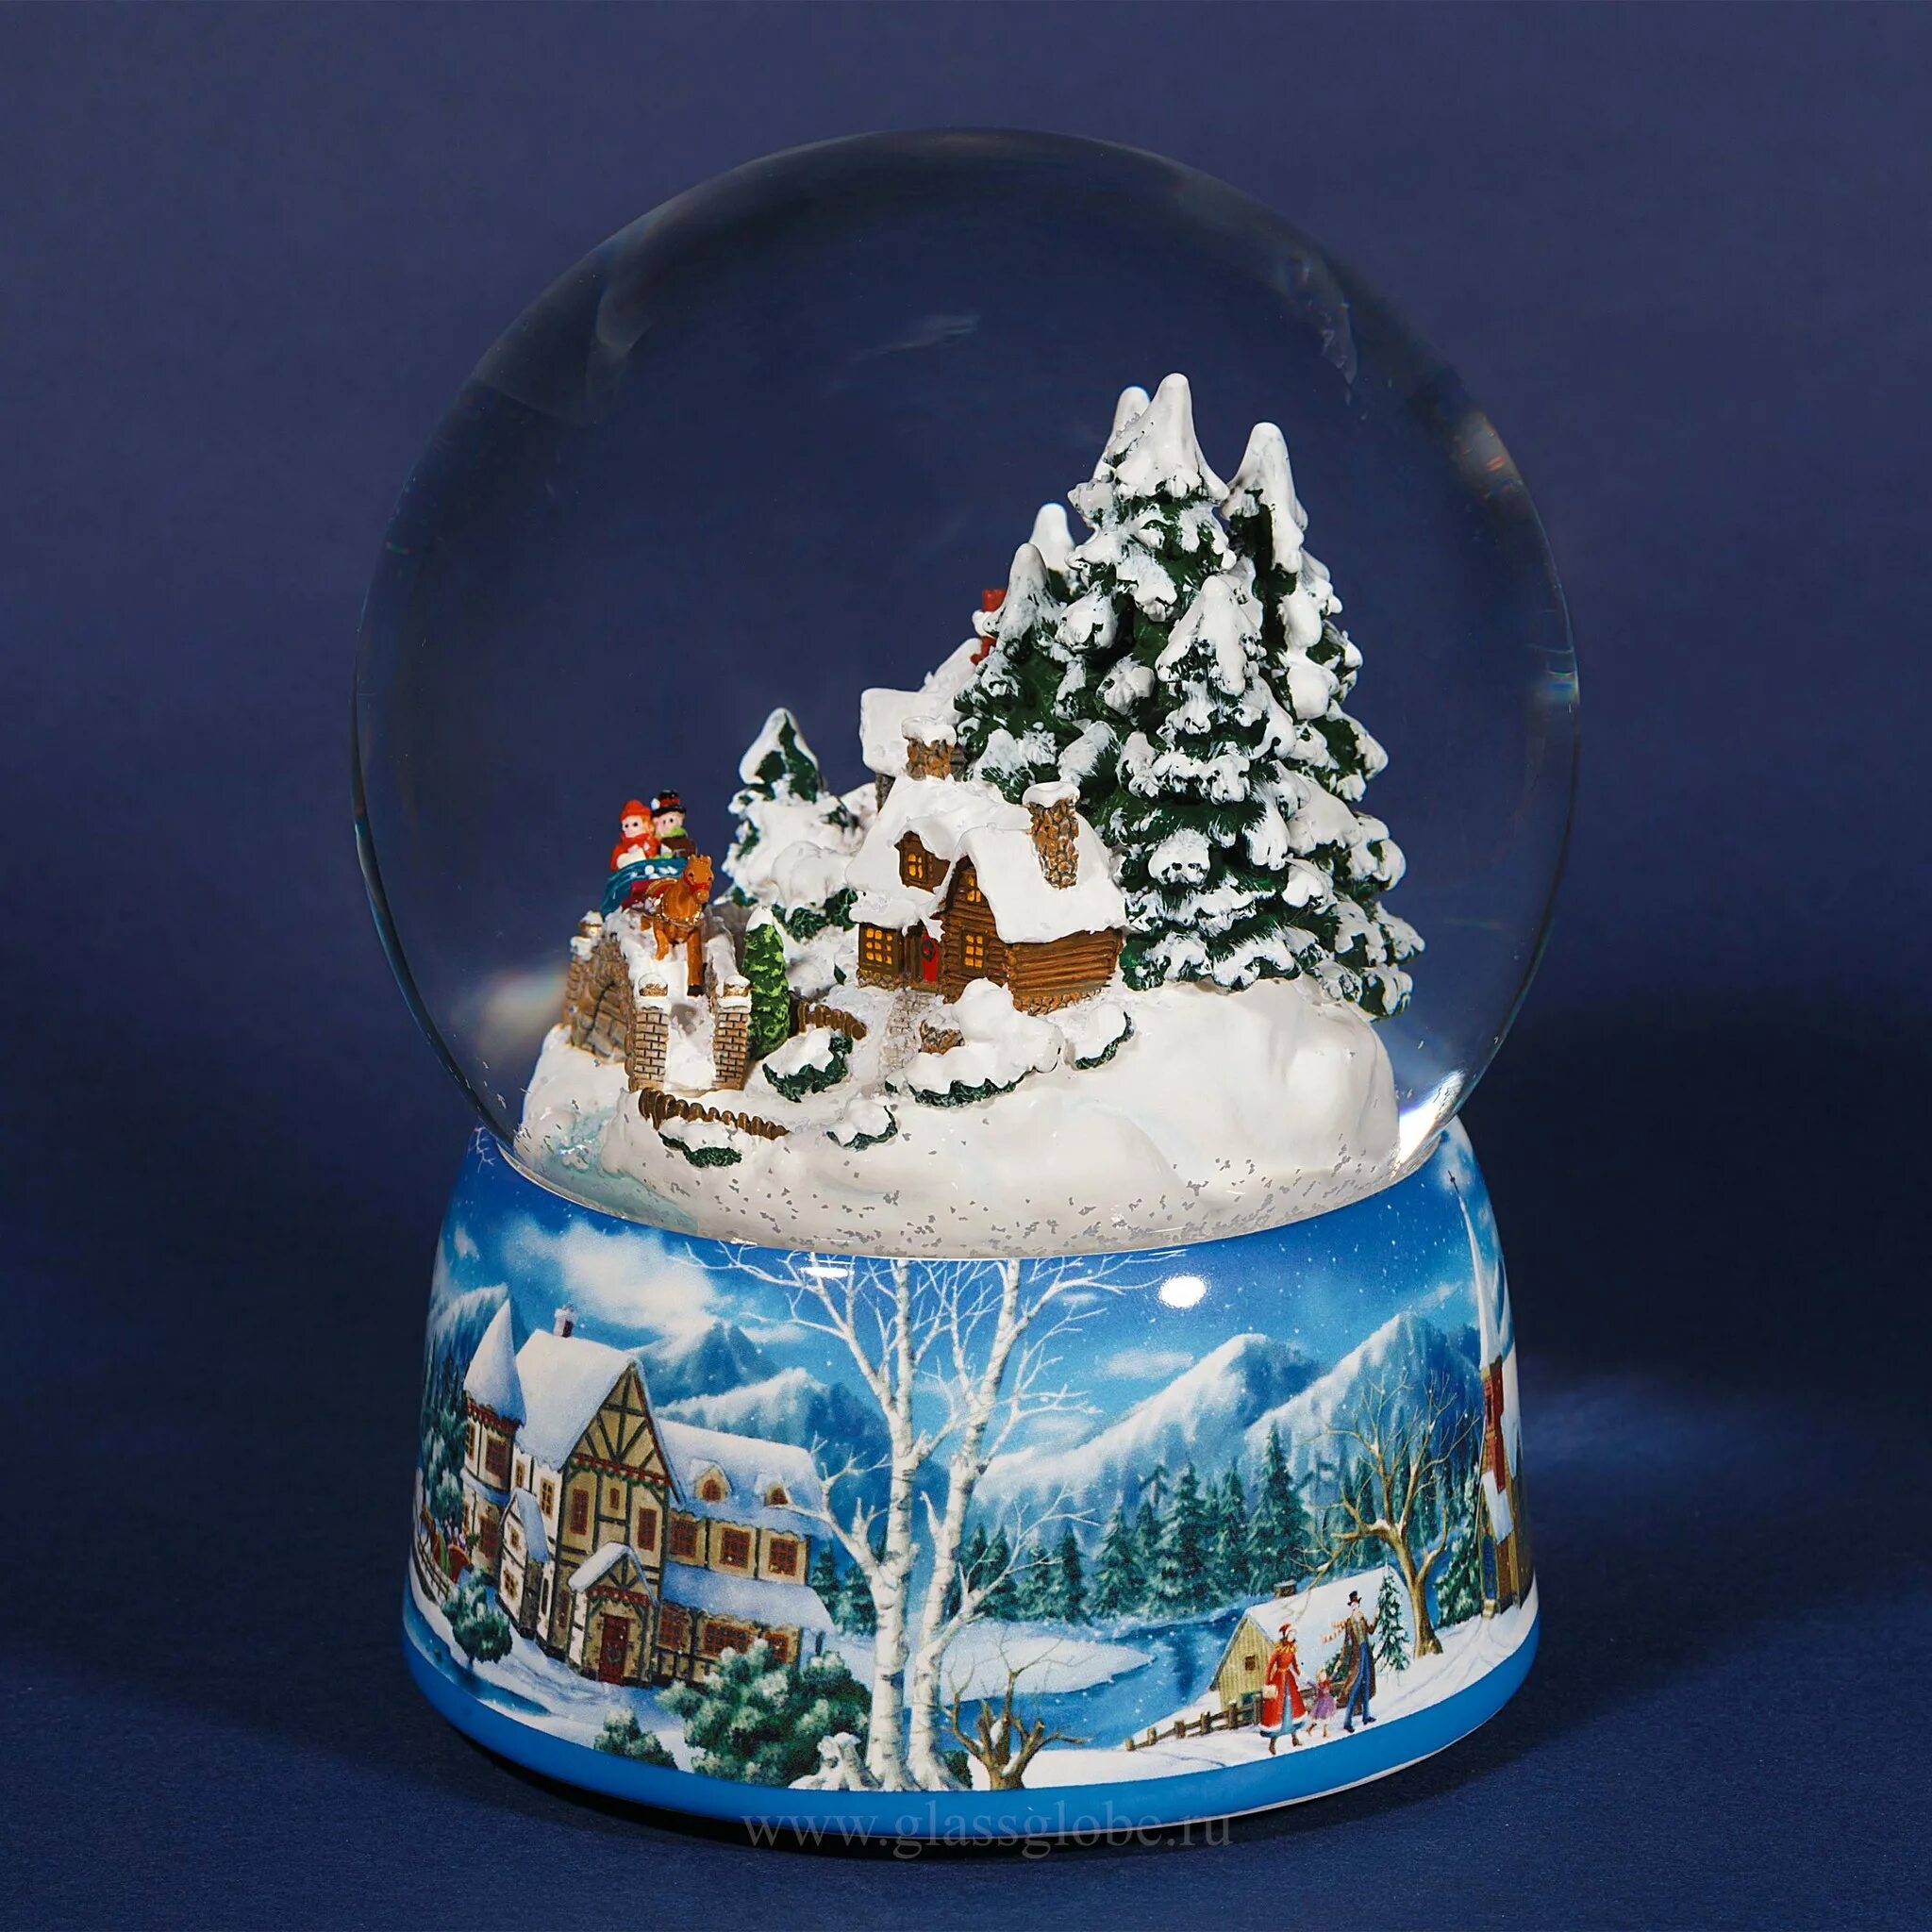 Шар падающий снег. Снежный шар Glassglobe "домик в лесу". Стеклянный шар со снегом. Новогодний шар со снегом. Новогодний стеклянный шар со снегом.